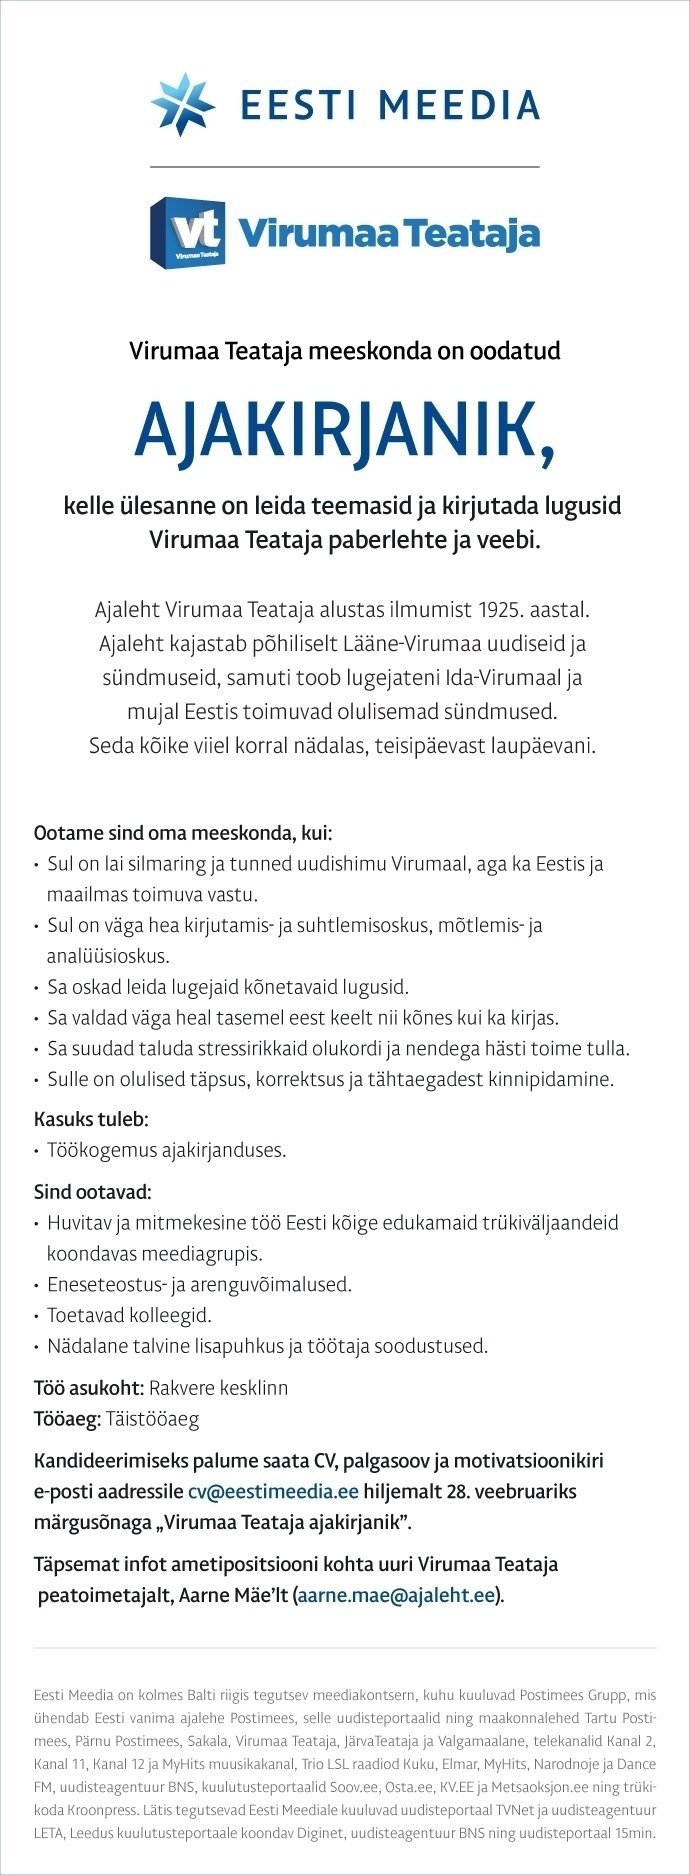 Eesti Meedia AS Virumaa Teataja ajakirjanik